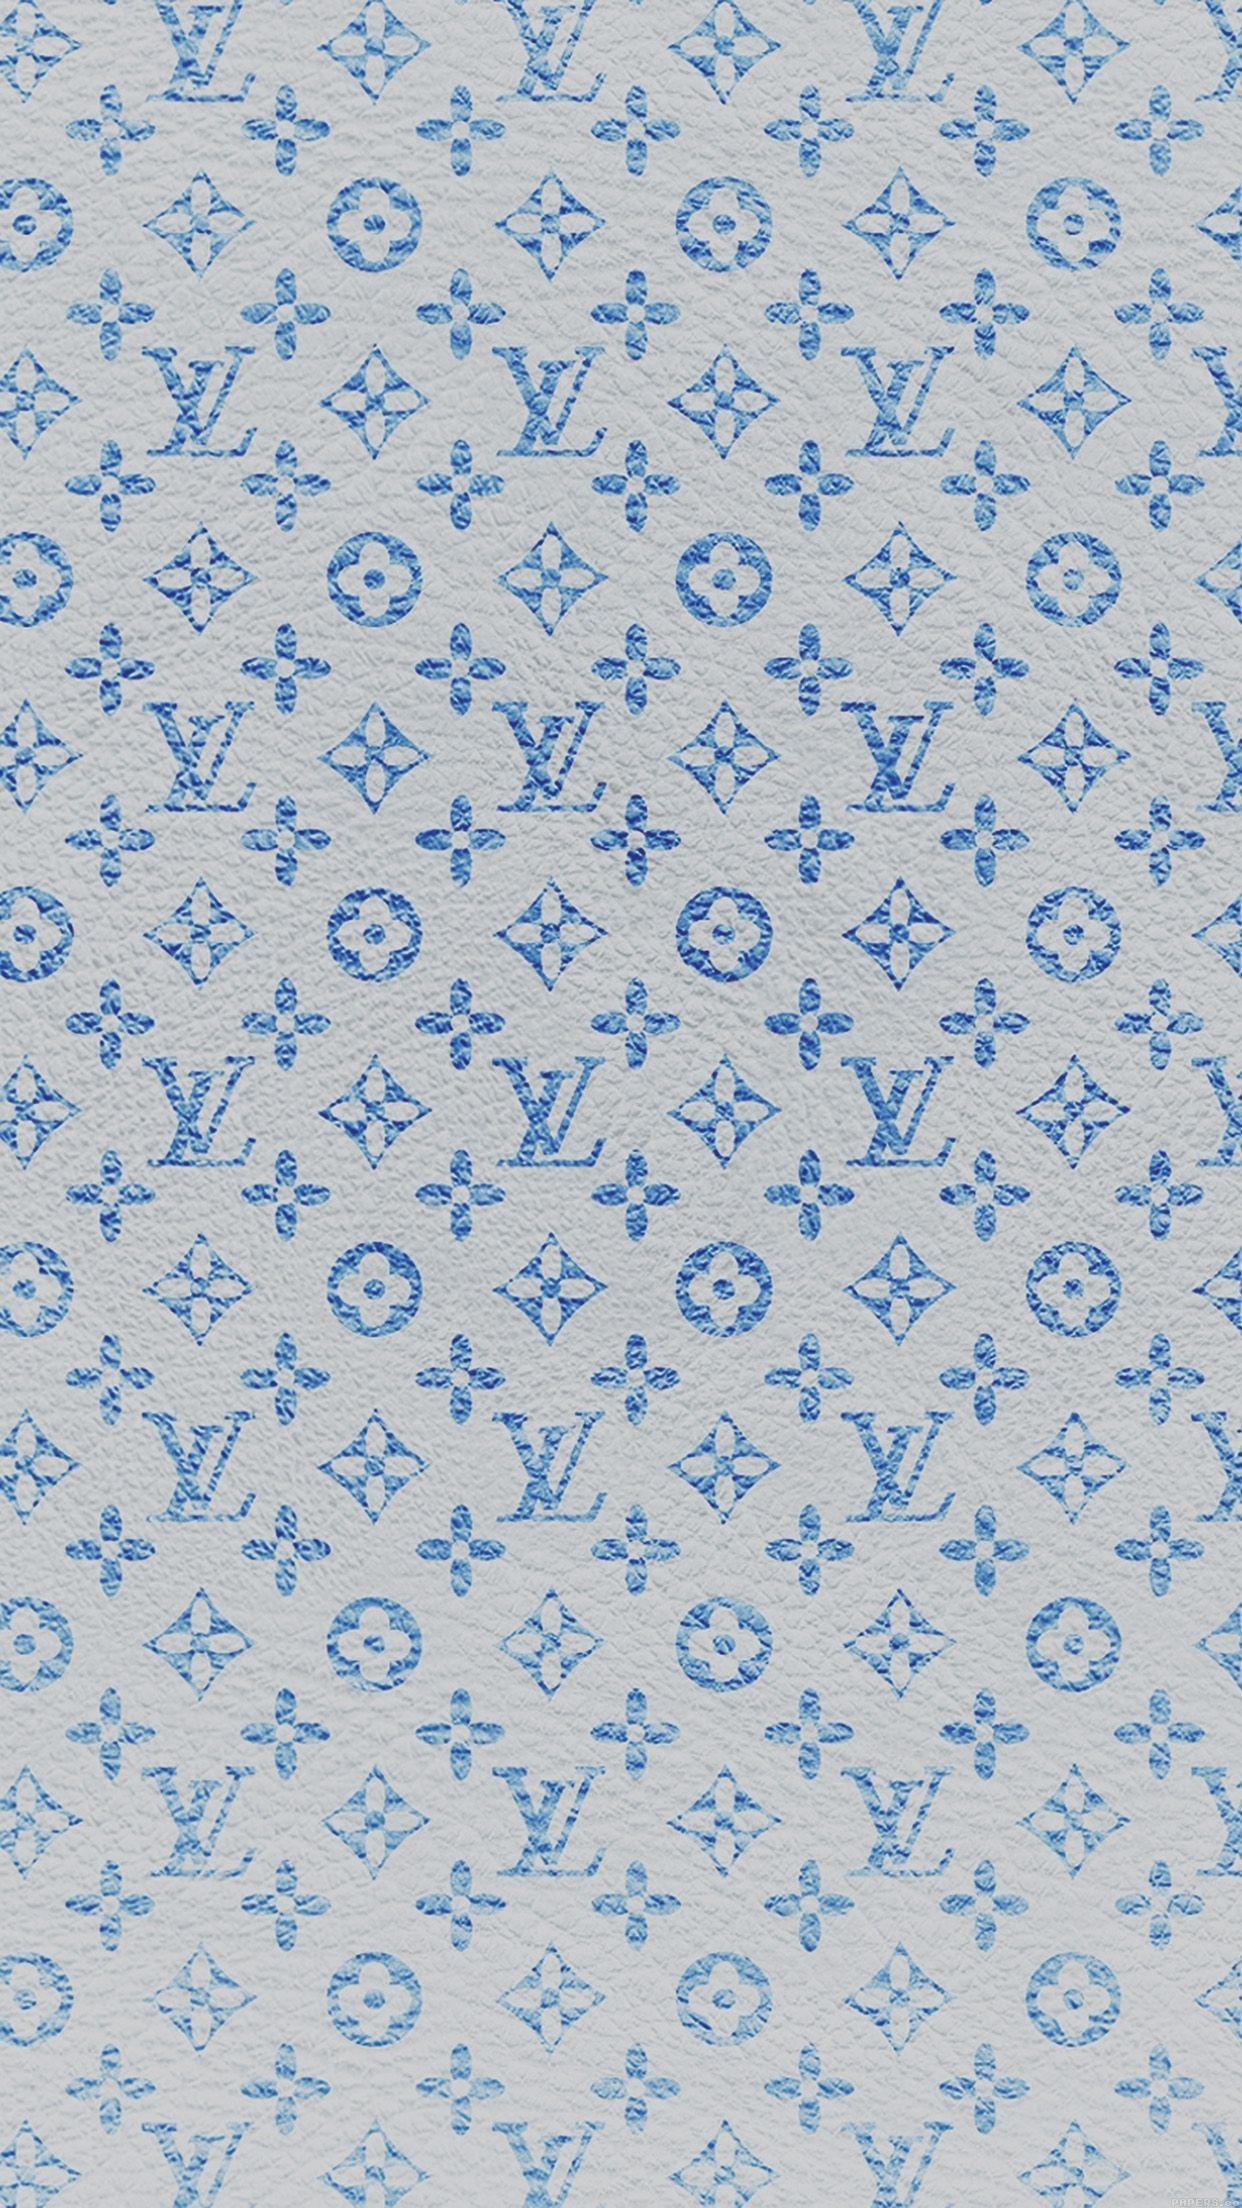 Download wallpapers Louis Vuitton blue logo, 4k, blue neon lights